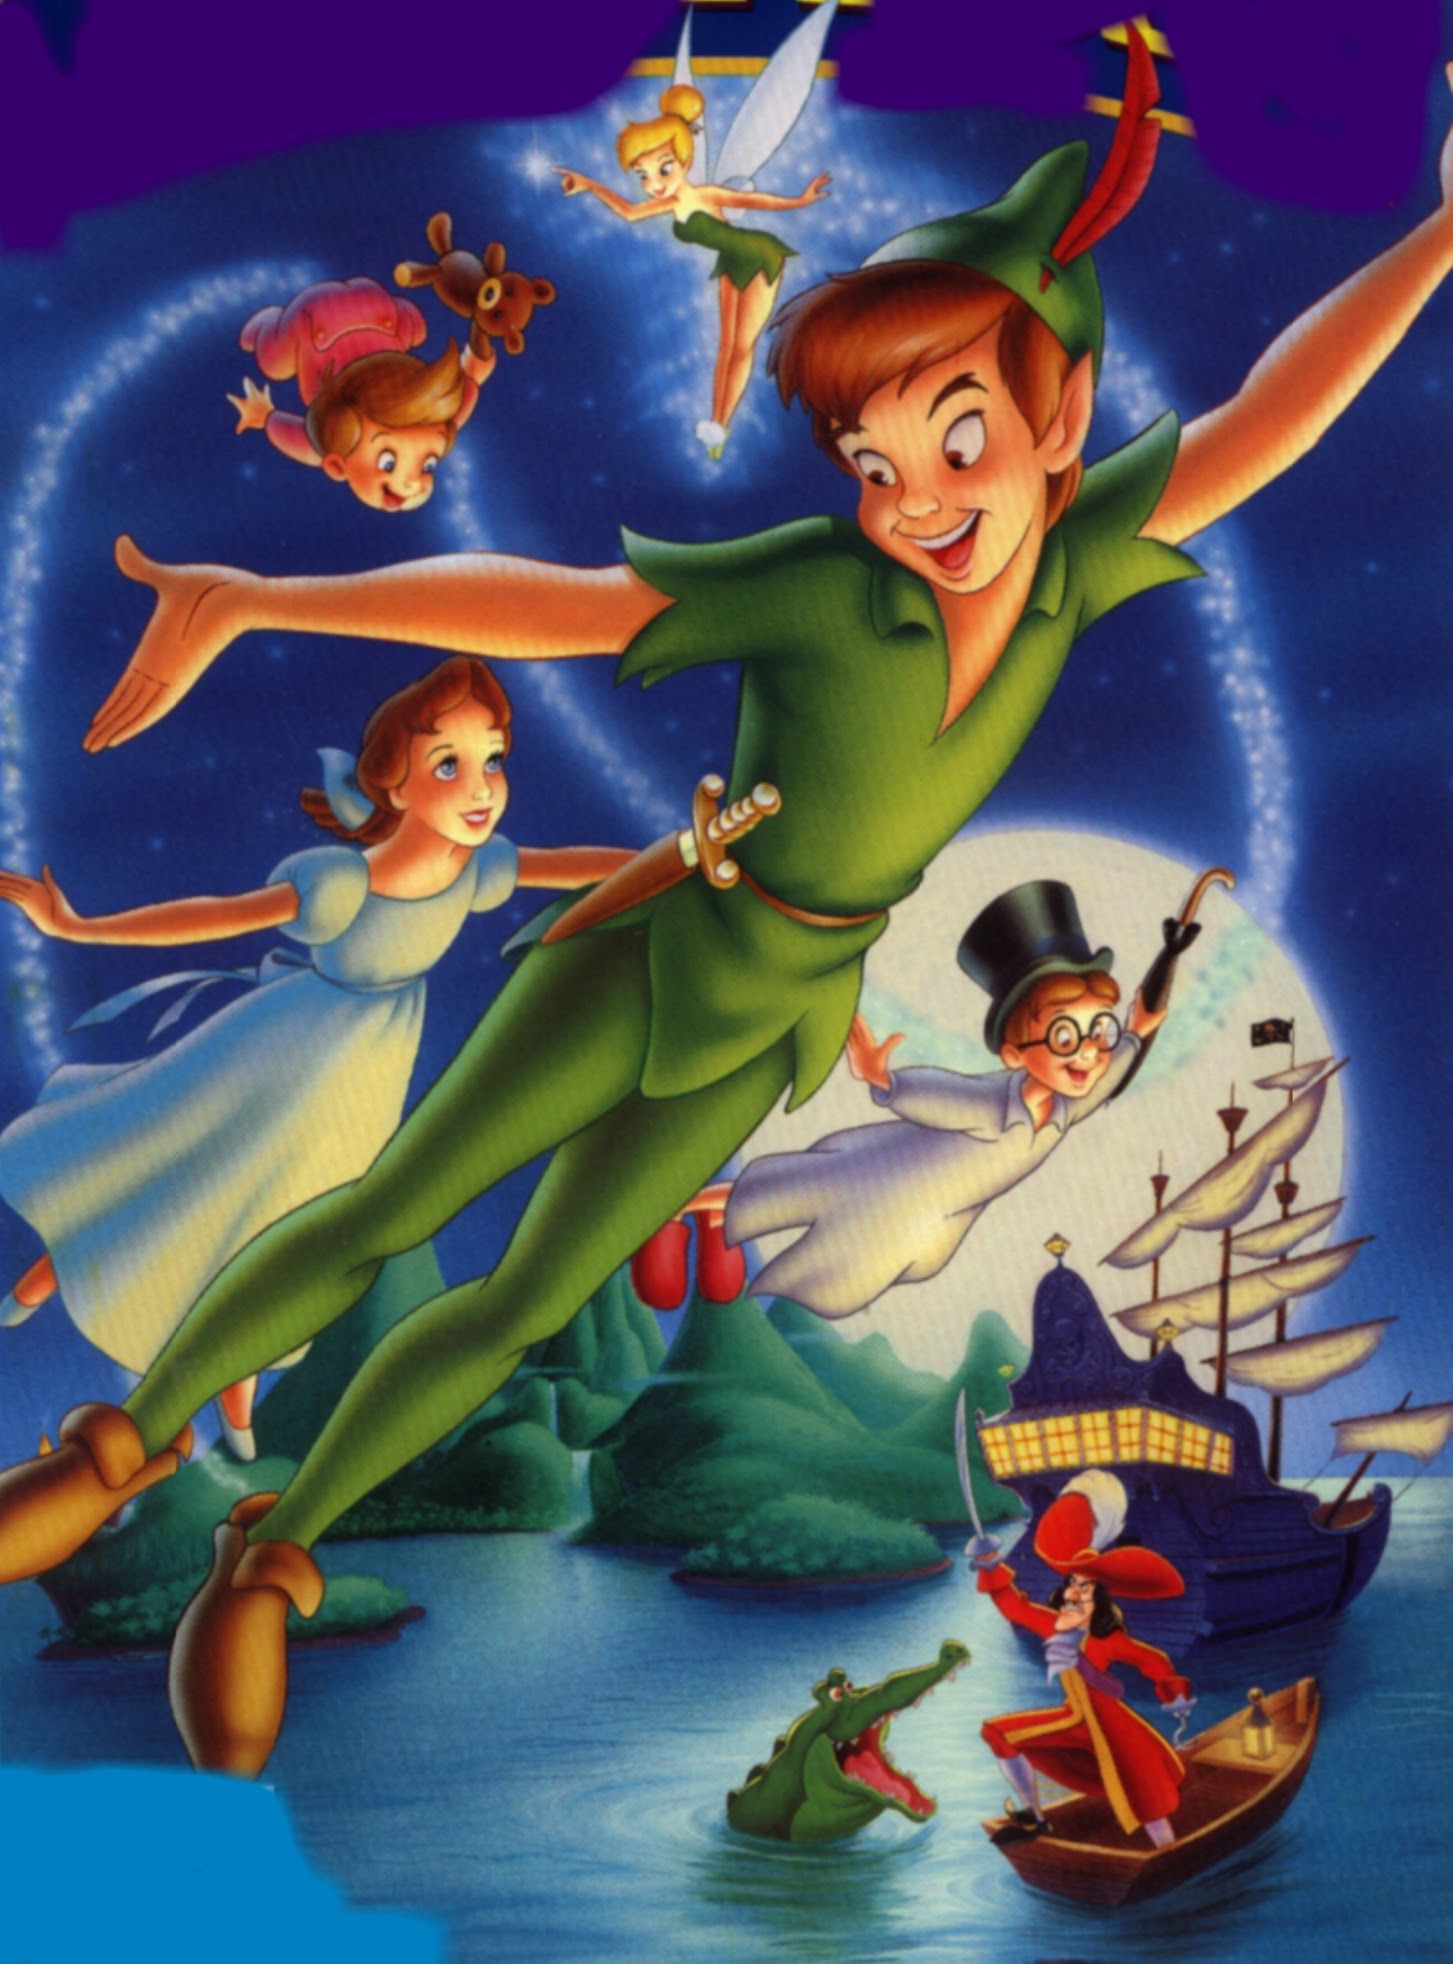 Peter Pan wallpaper, Movie, HQ Peter Pan pictureK Wallpaper 2019